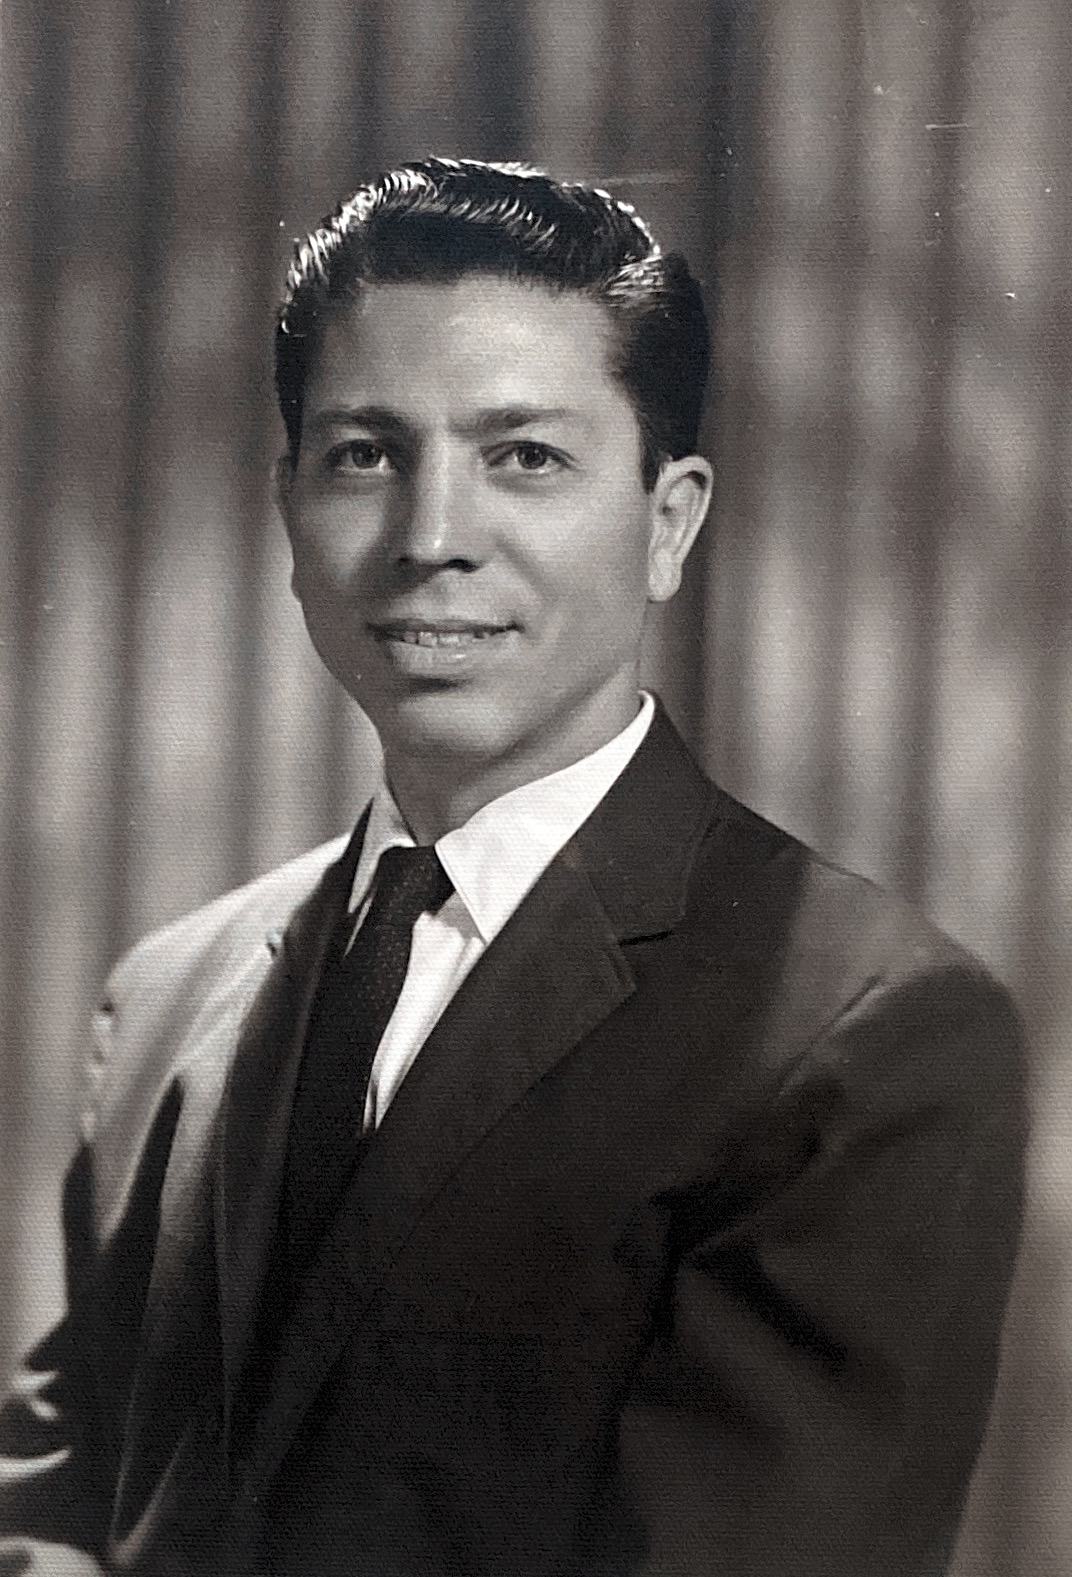 My dad- Joseph John Chacon around 1955